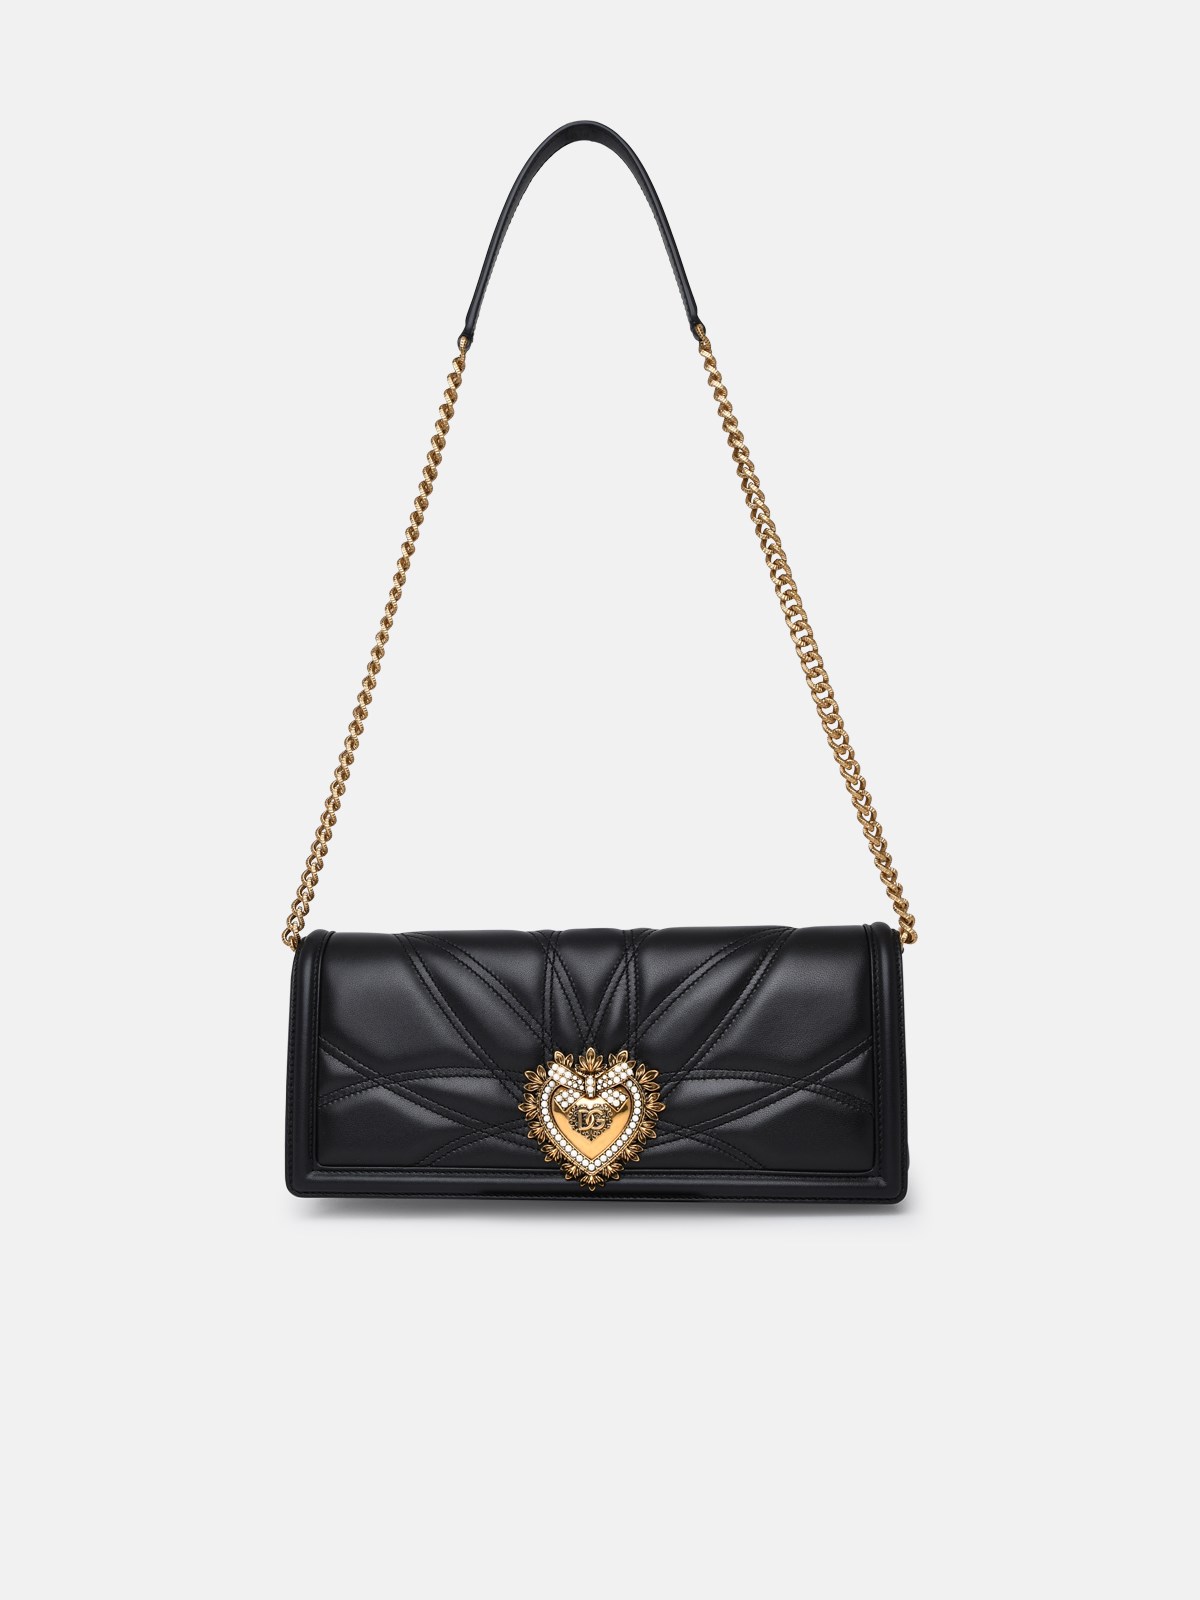 Dolce & Gabbana Devotion Black Leather Bag